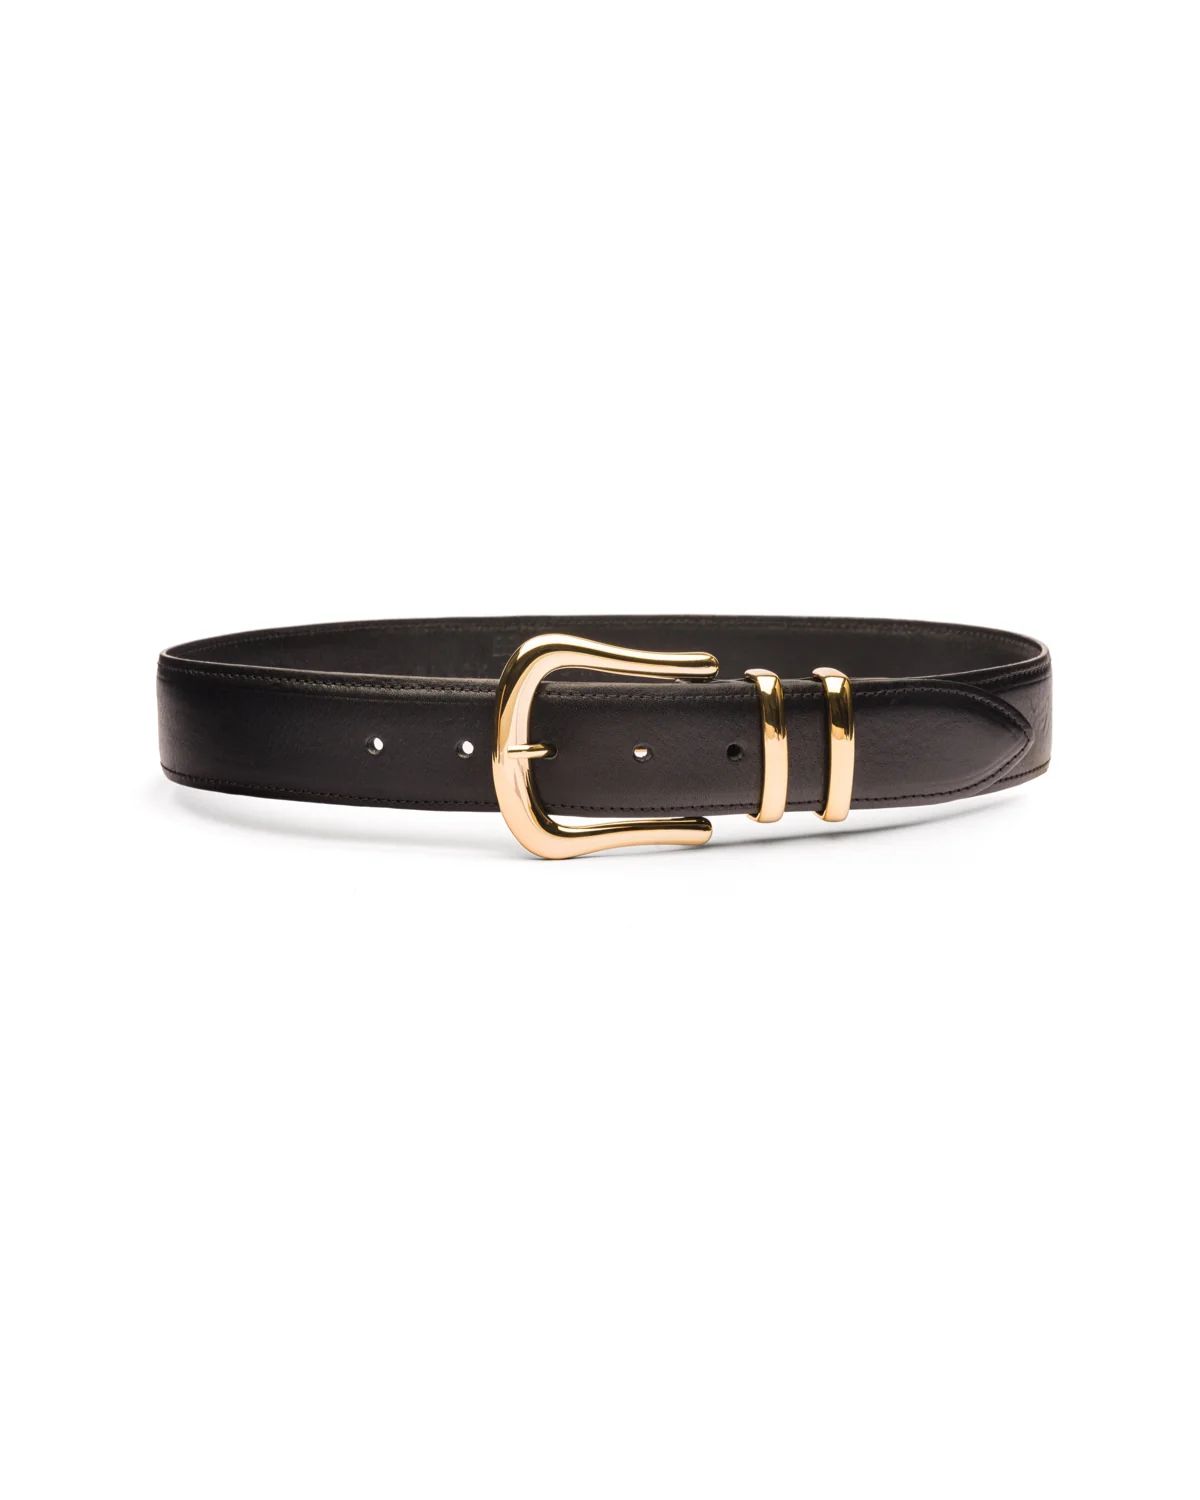 Marina black leather waist belt | Black & Brown London